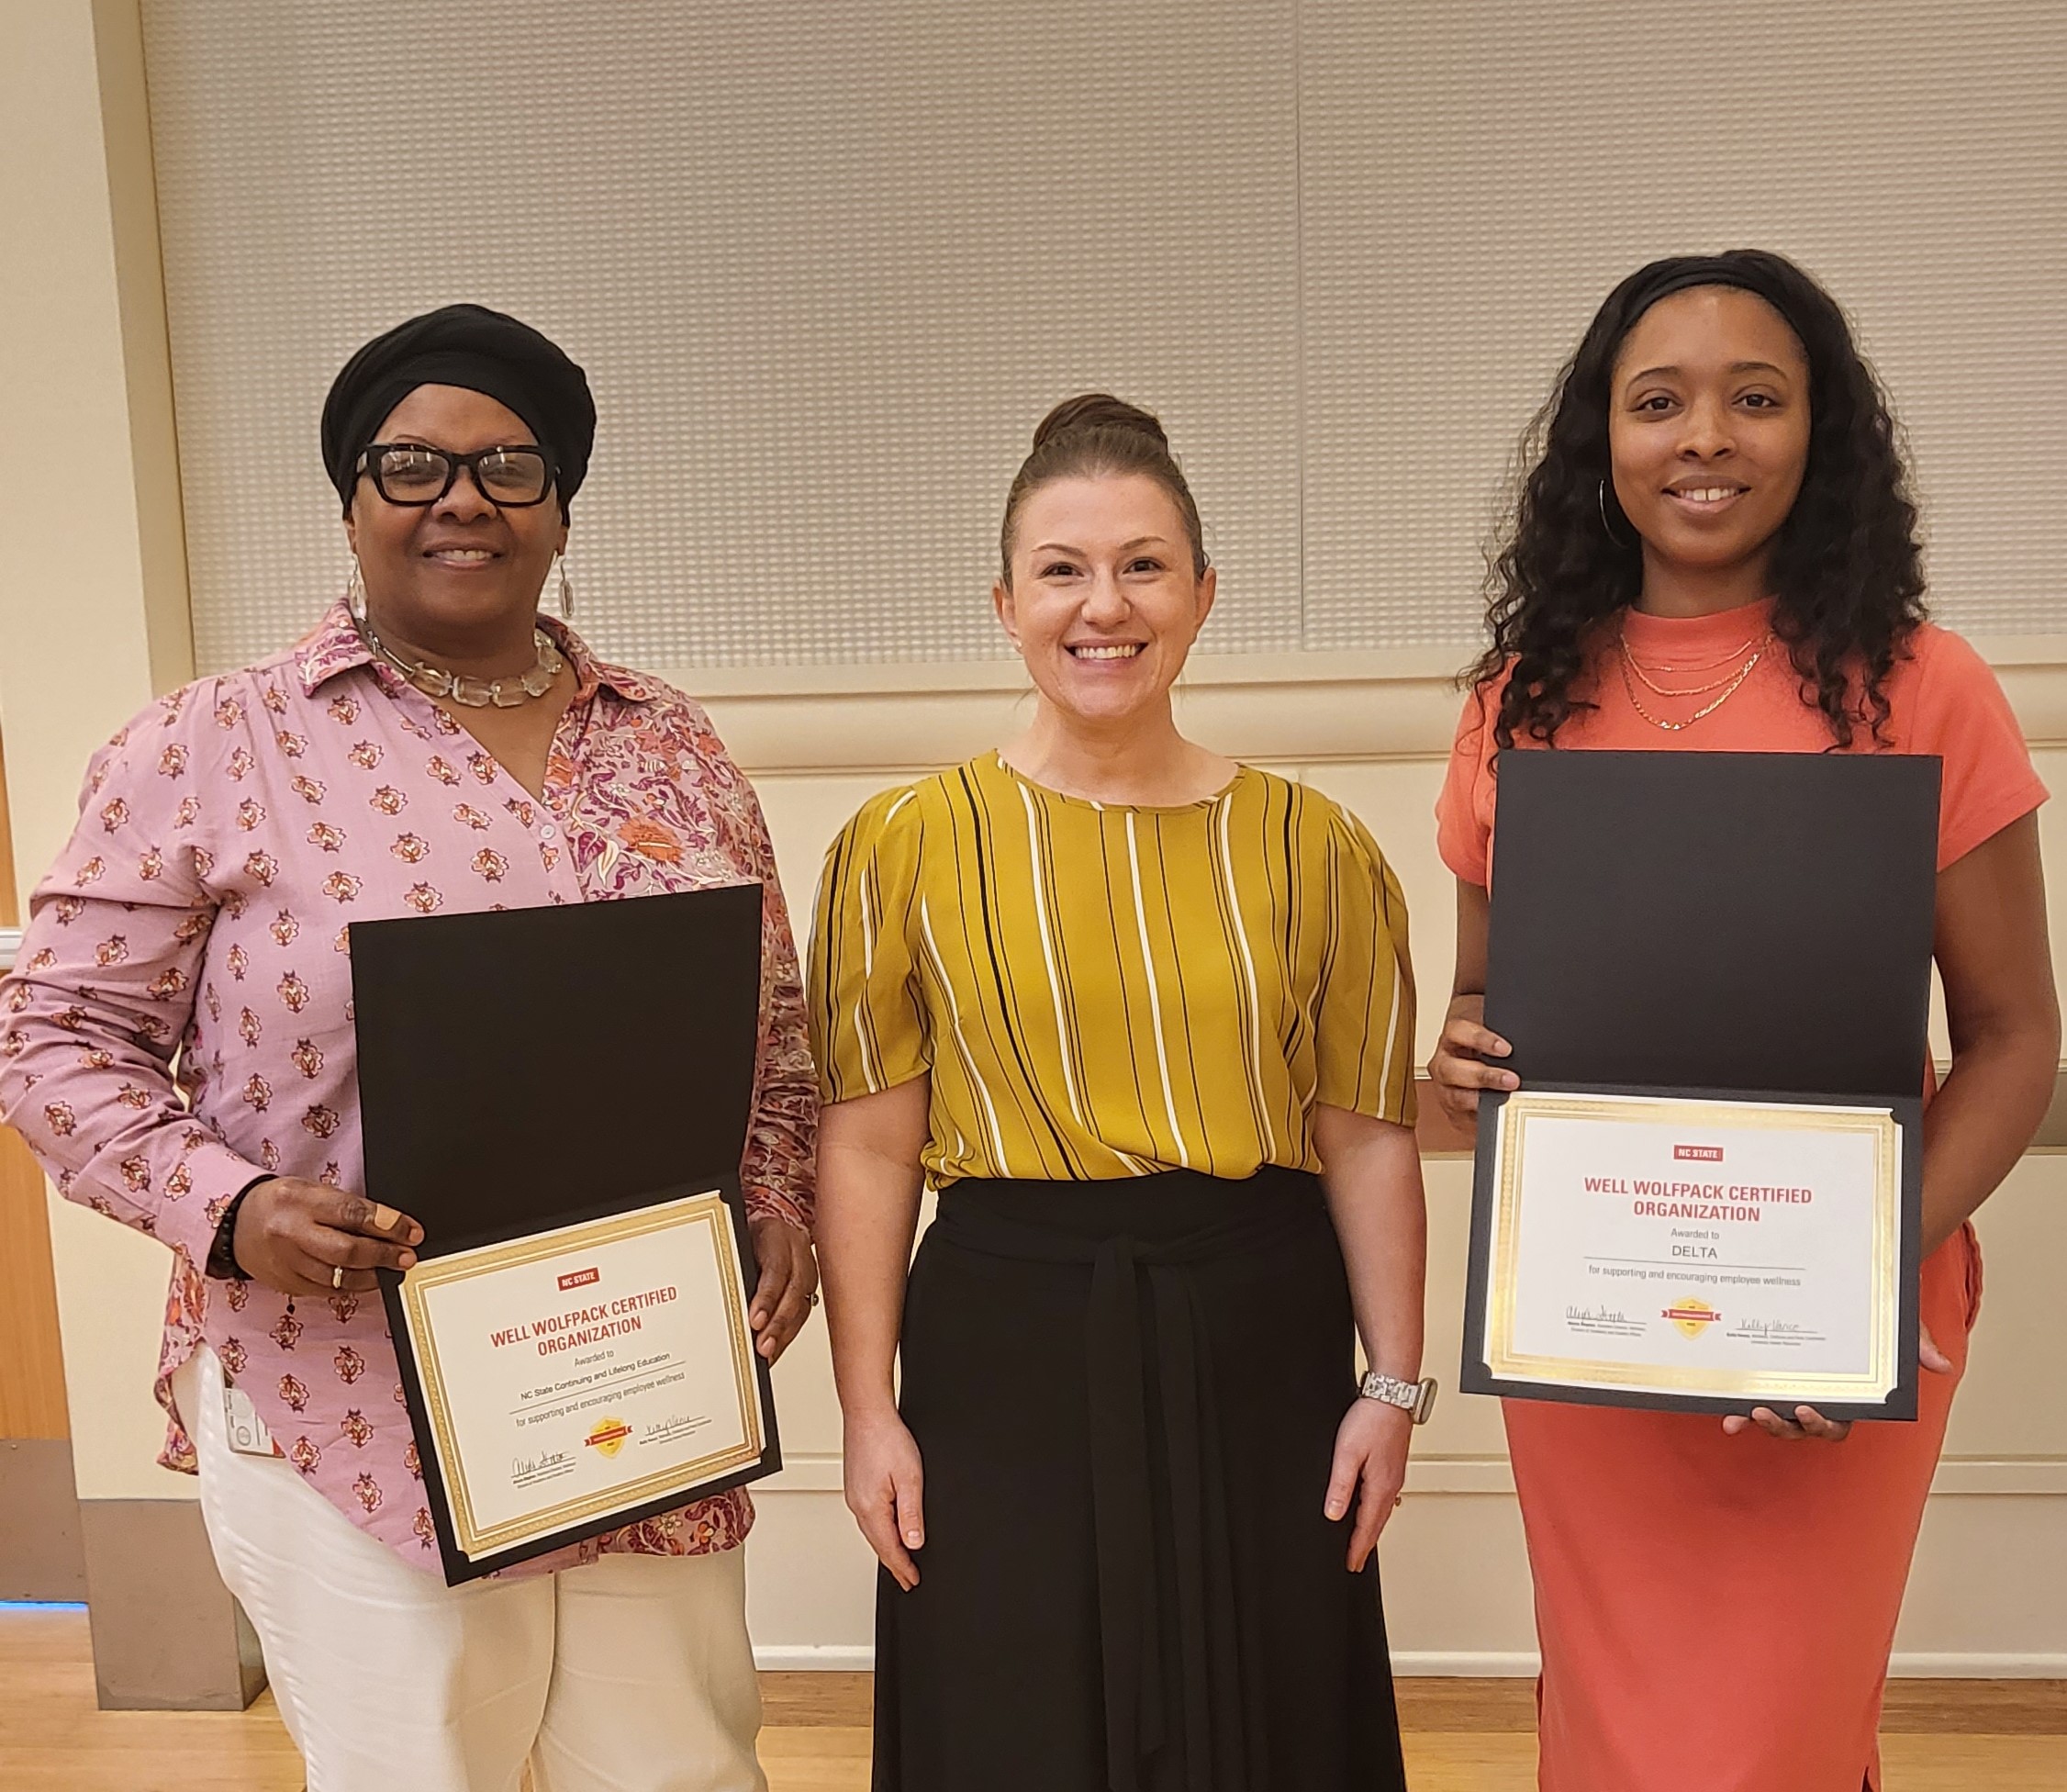 Three women pose together after winning a wellness award.